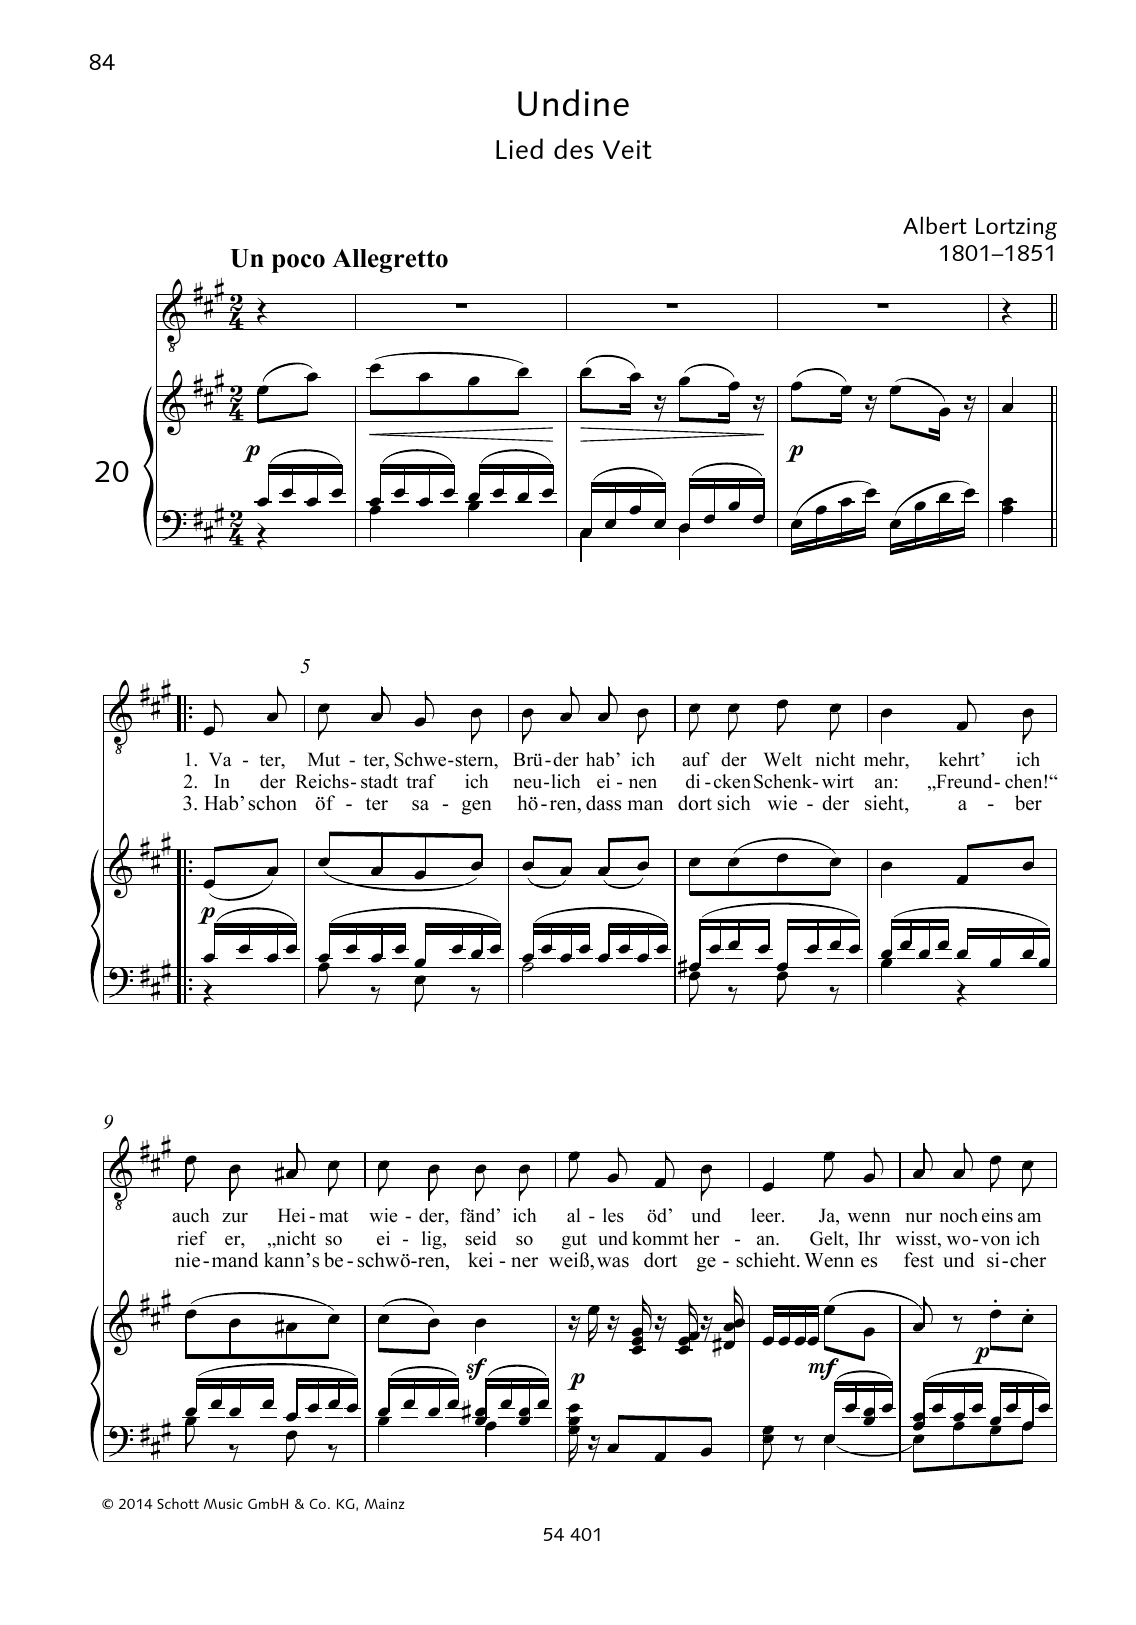 Albert Lortzing Vater, Mutter, Schwestern, Brüder sheet music notes and chords arranged for Piano & Vocal